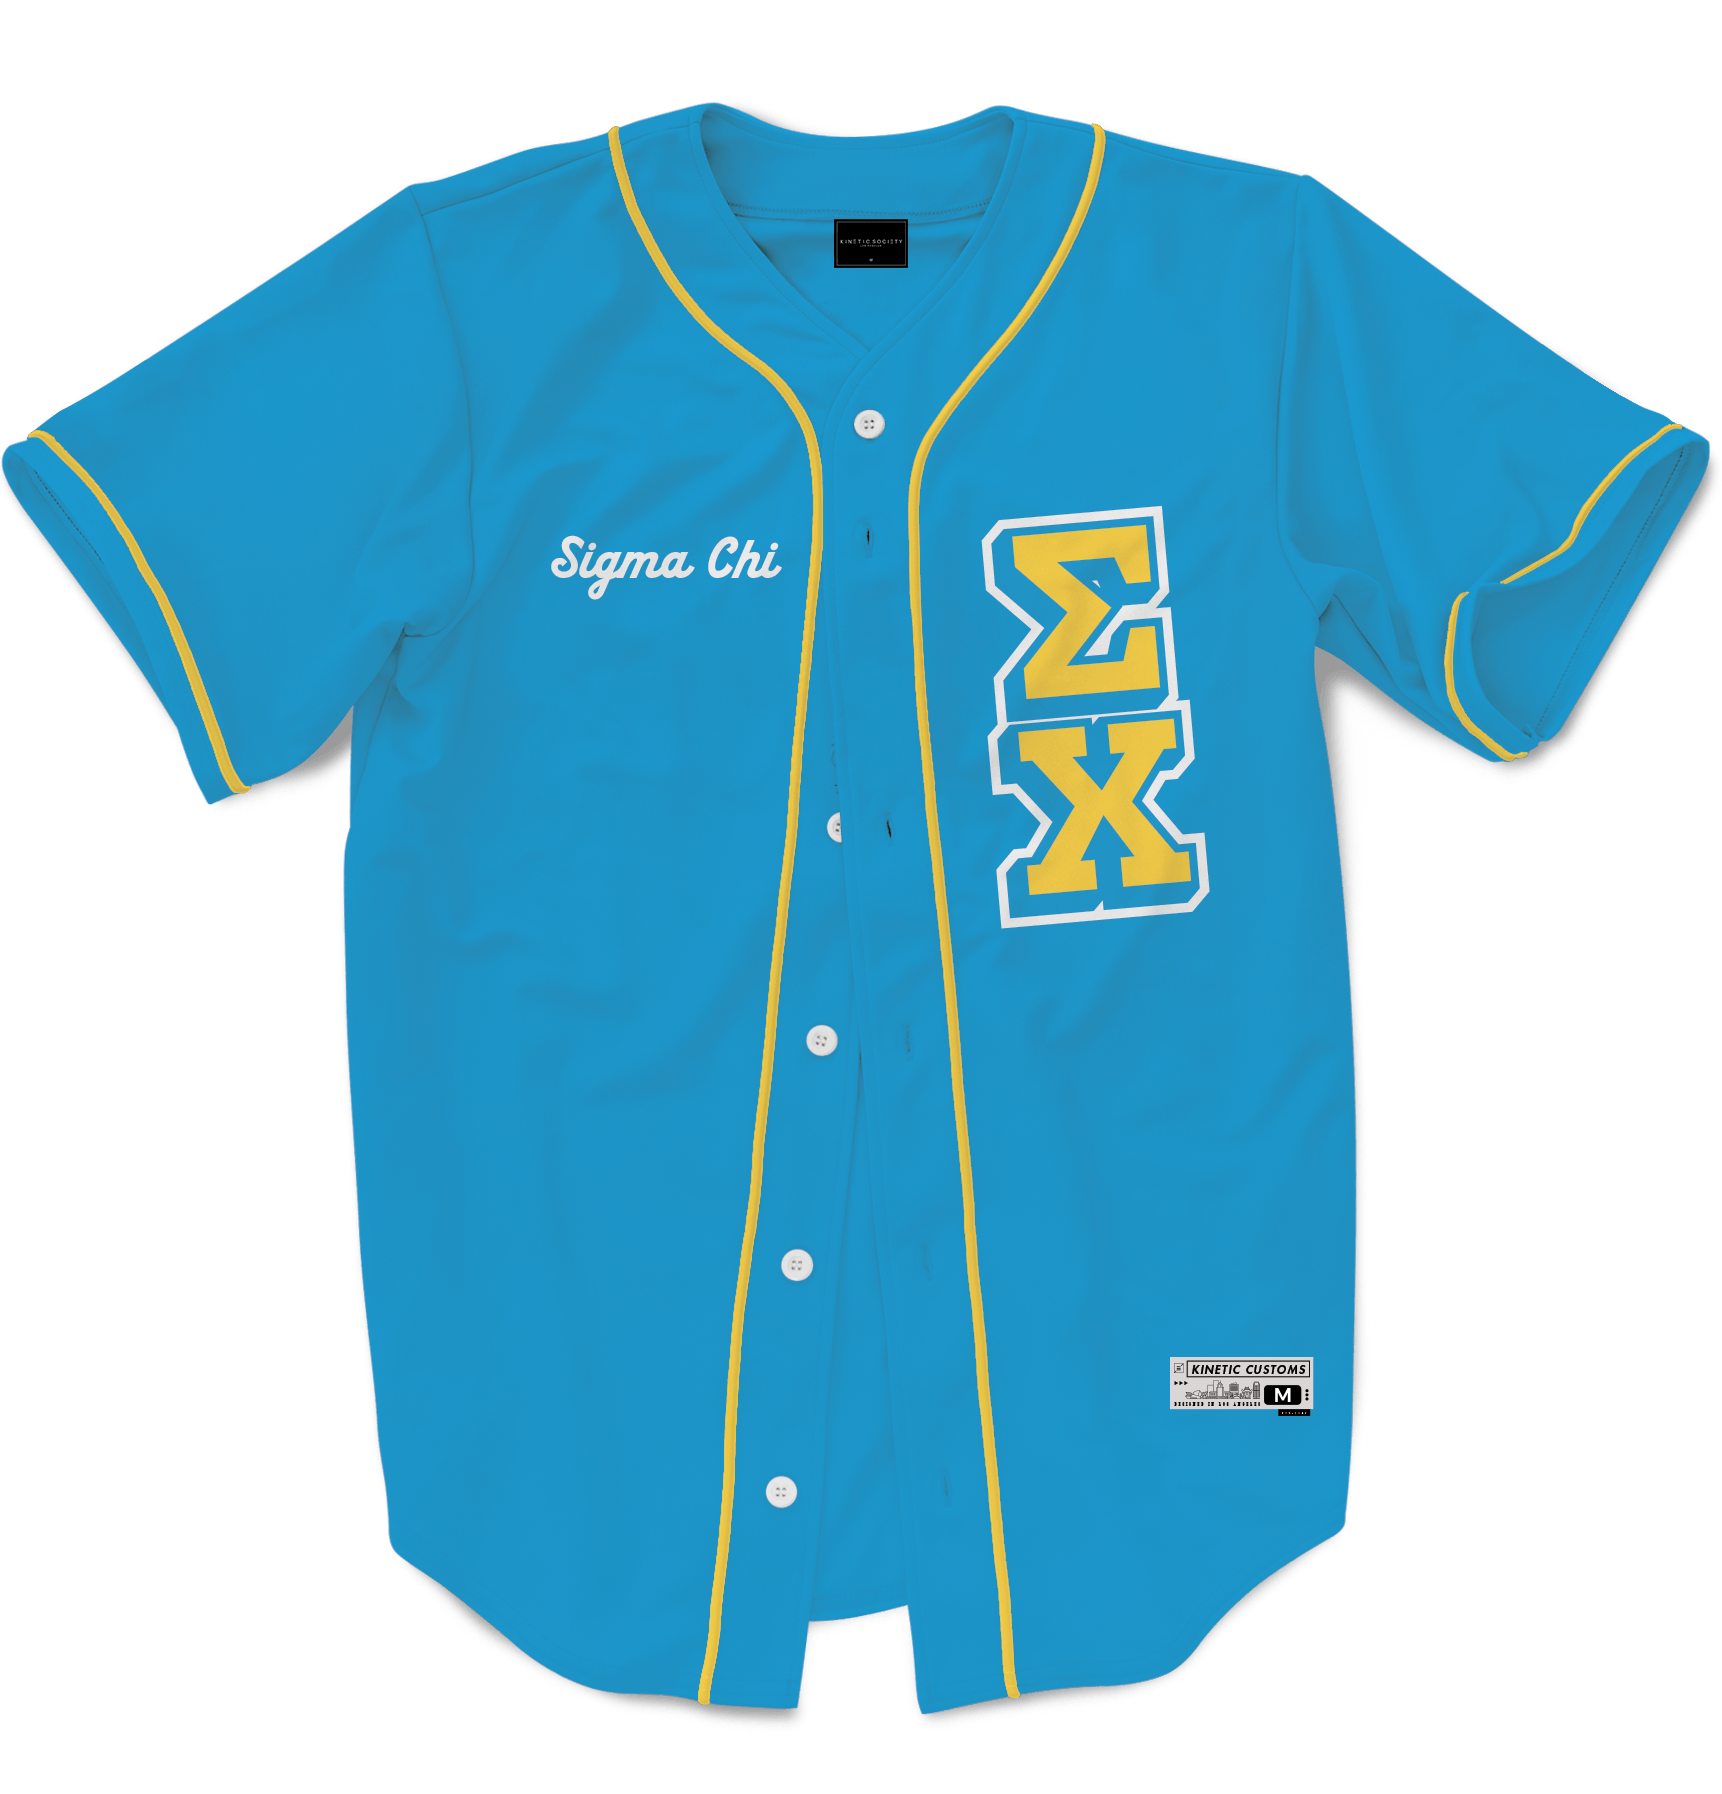 SIGMA CHI - The Block Baseball Jersey Premium Baseball Kinetic Society LLC 